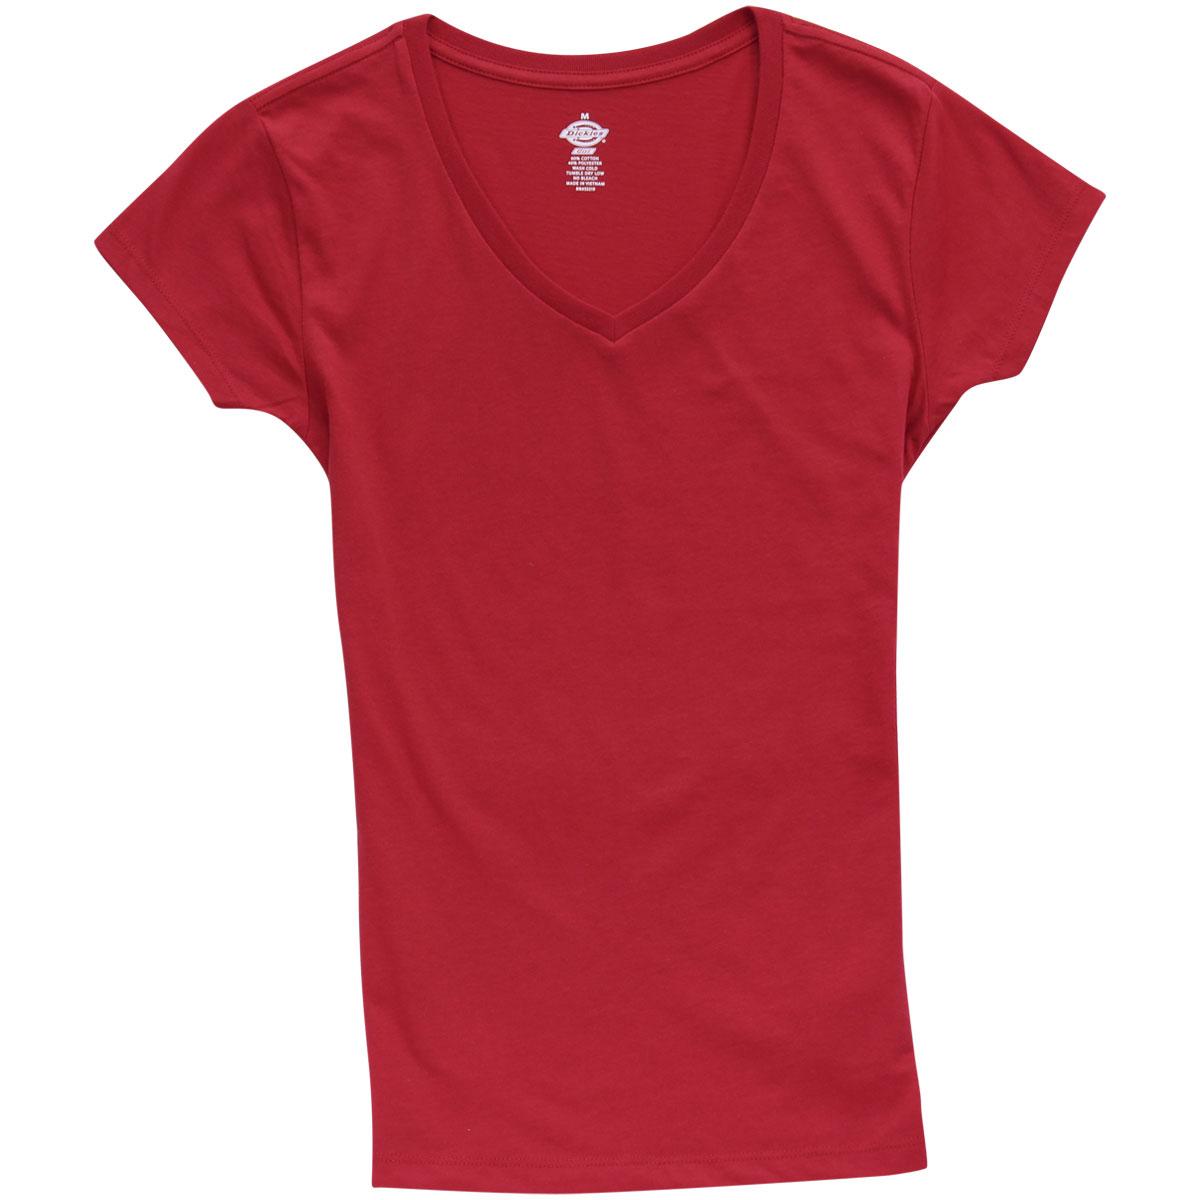 Dickies Girl Junior's Slim Fit Short Sleeve V Neck T Shirt - Red - Large